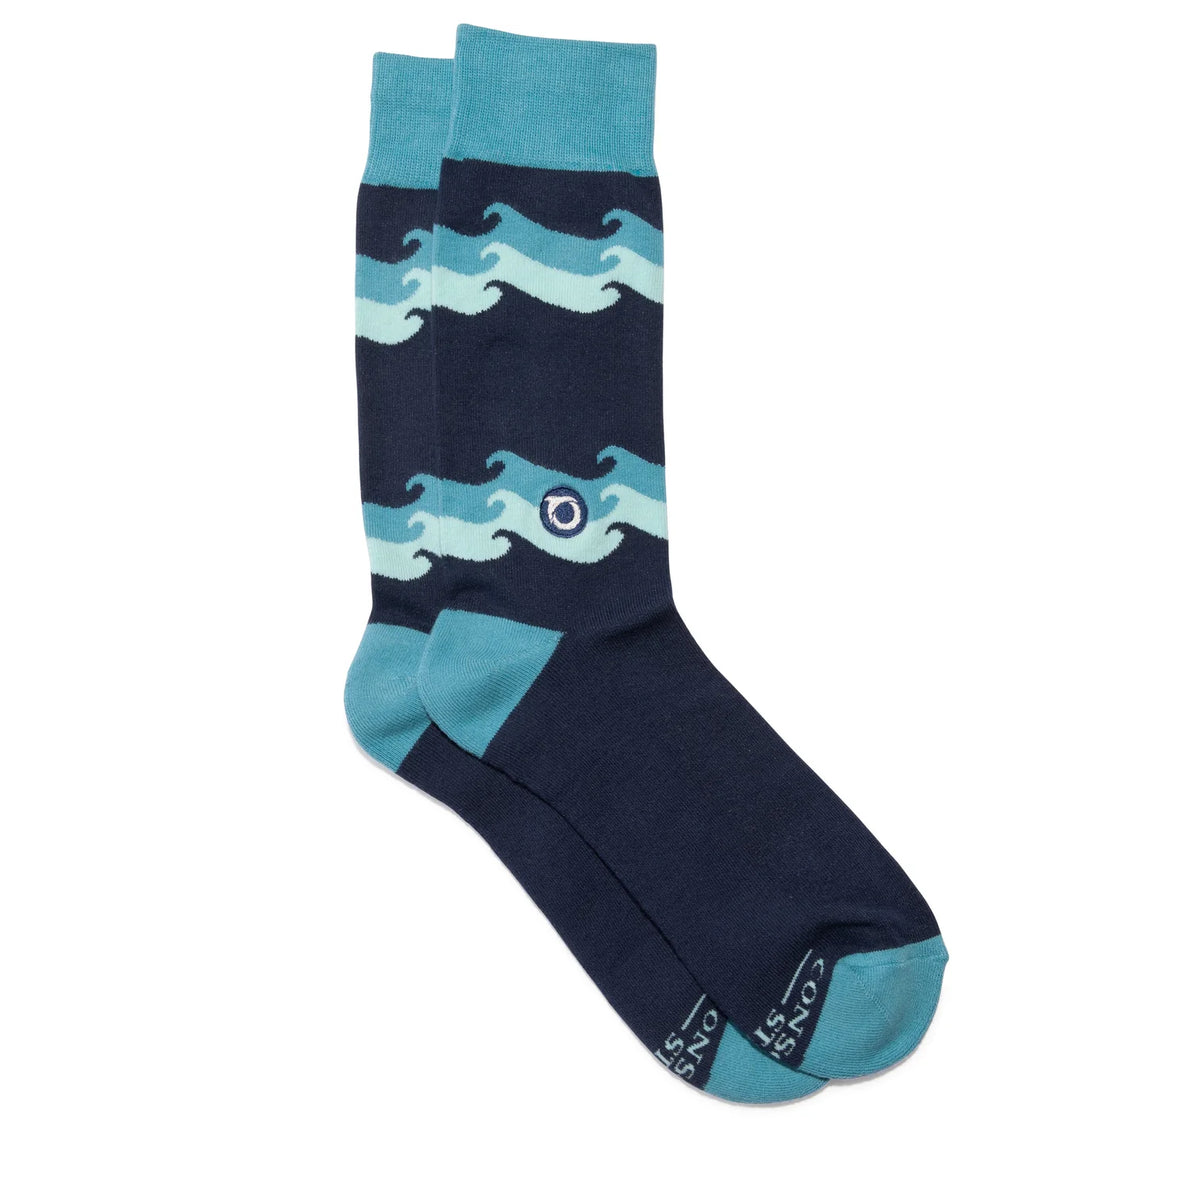 socks that protect oceans (single pair)